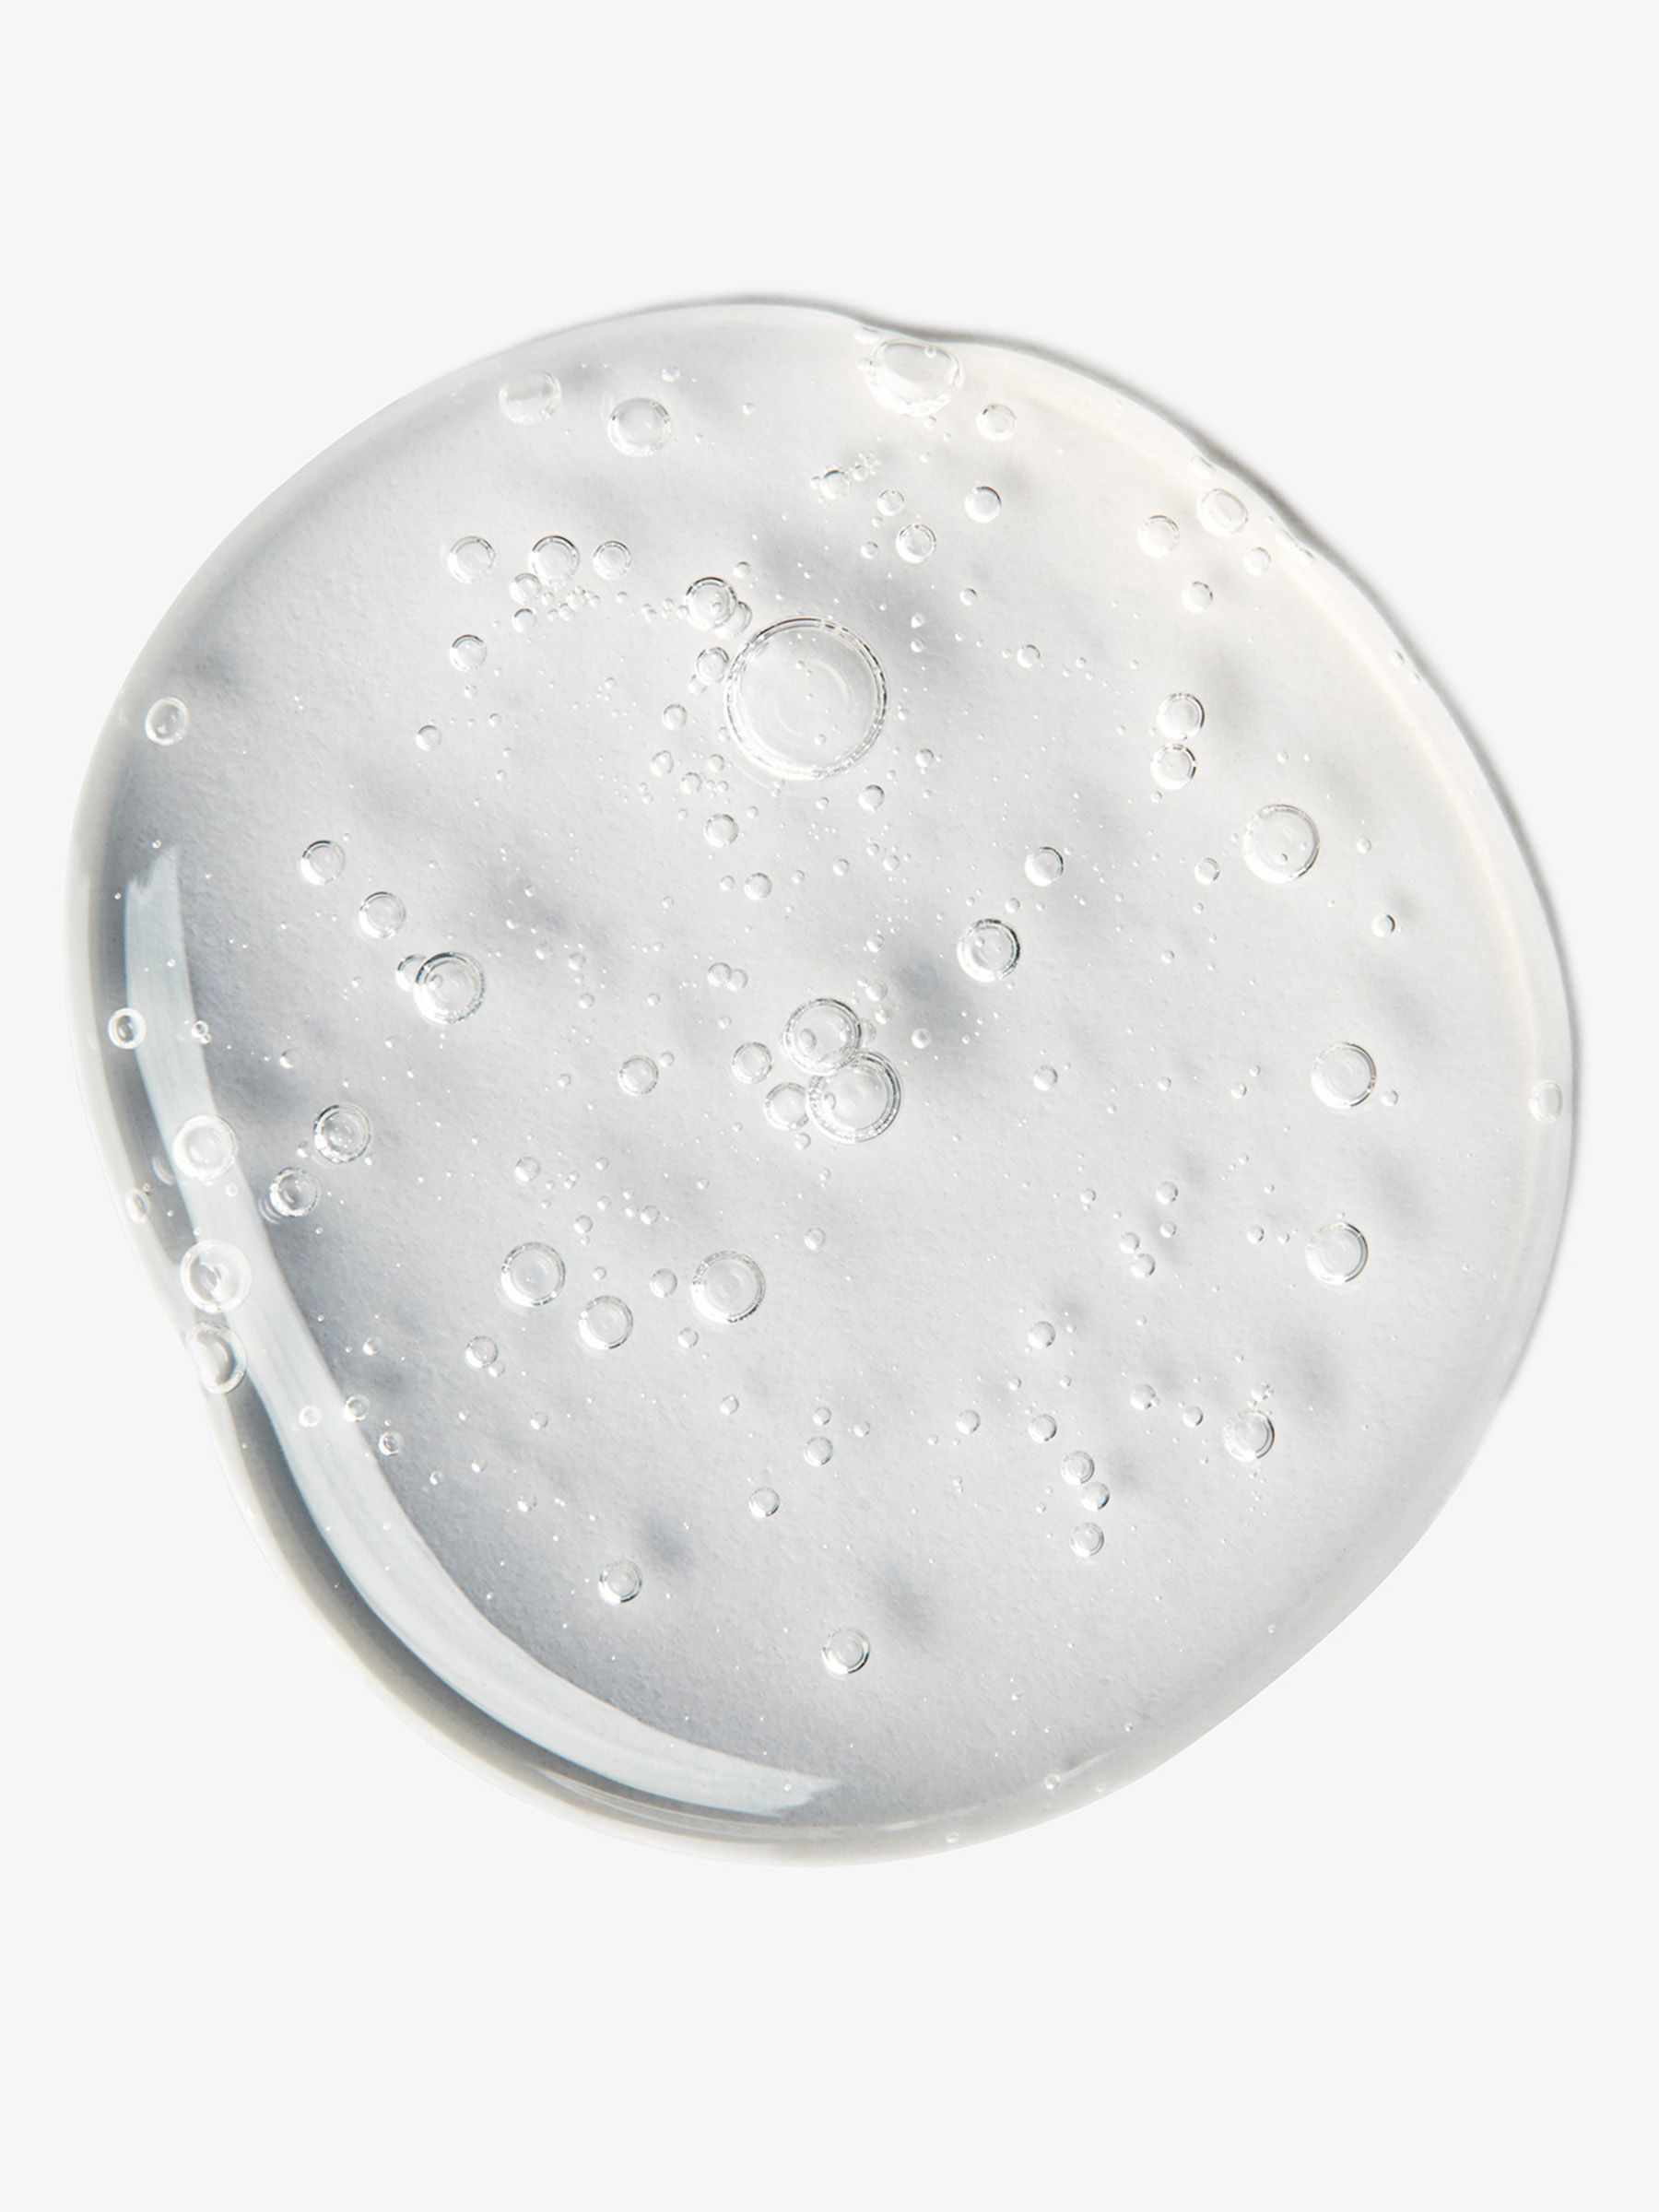 Kiehl's Calendula Deep Cleansing Foaming Face Wash, 230ml 2